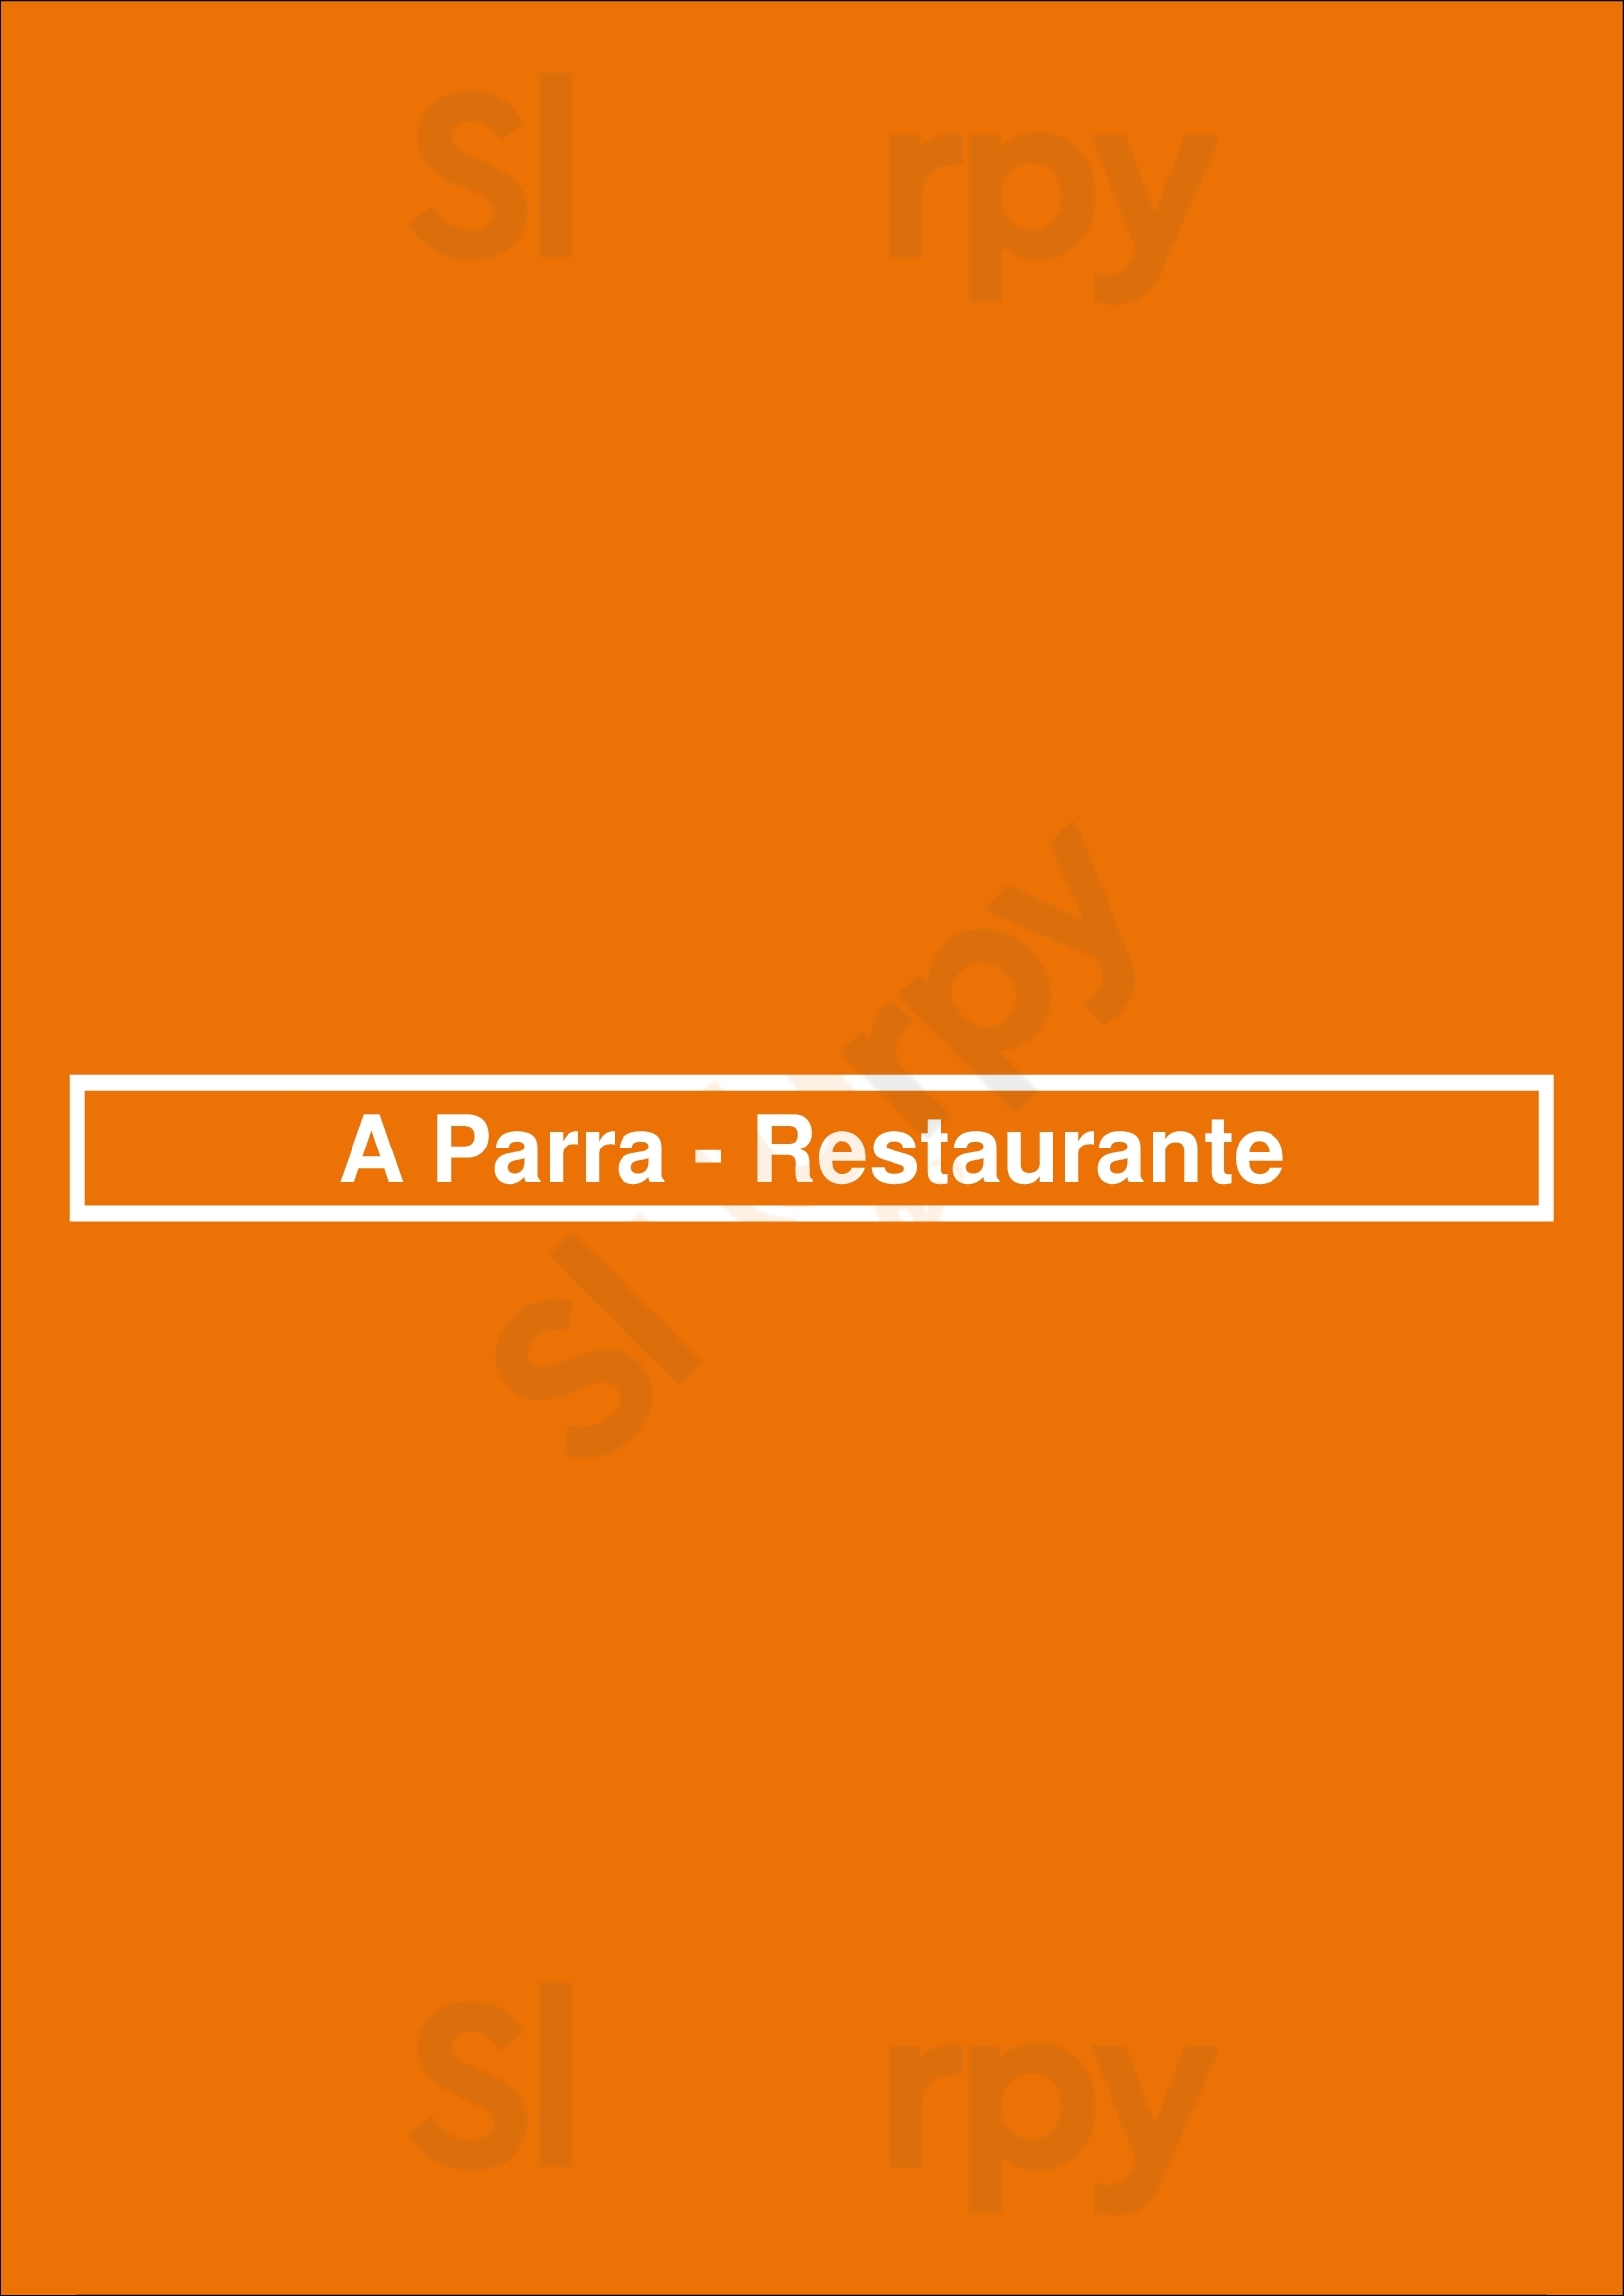 A Parra - Restaurante Lisboa Menu - 1